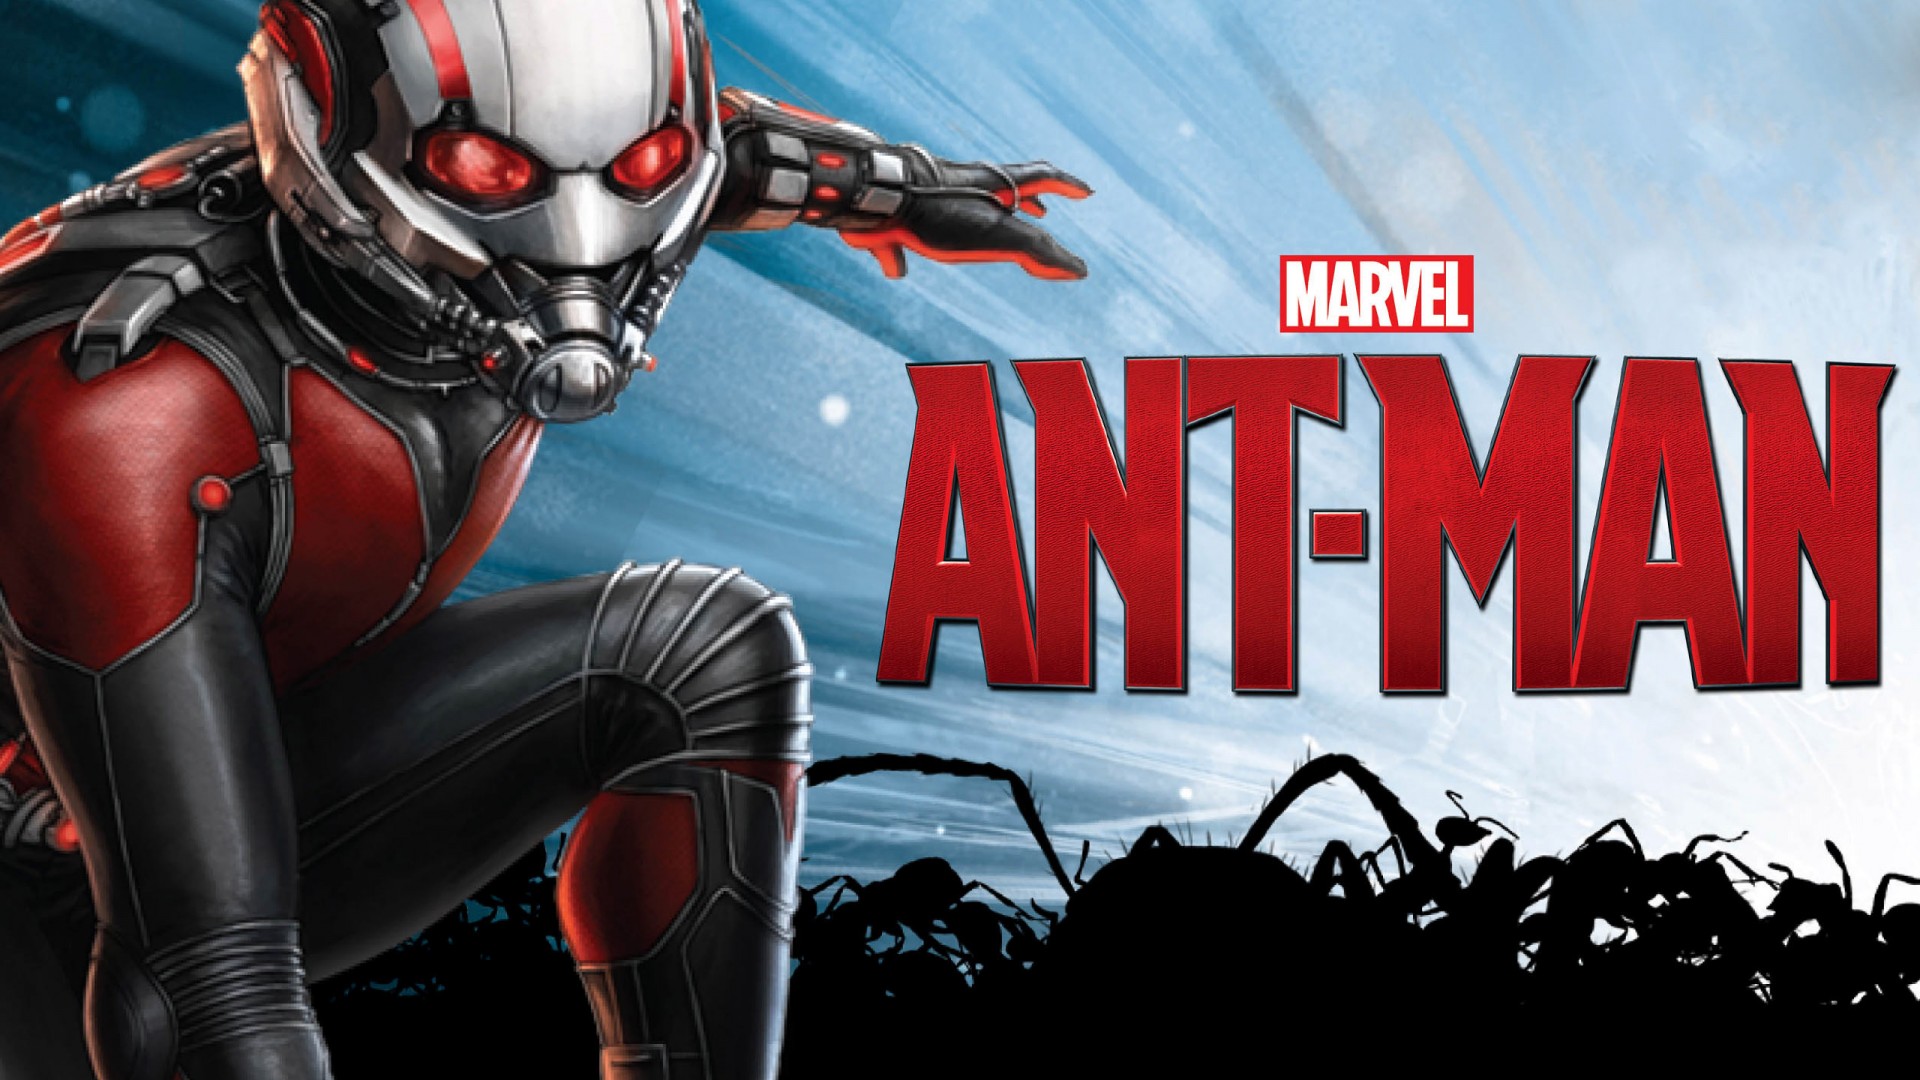 Marvel Ant Man Movie Poster HD Wallpaper Stylish